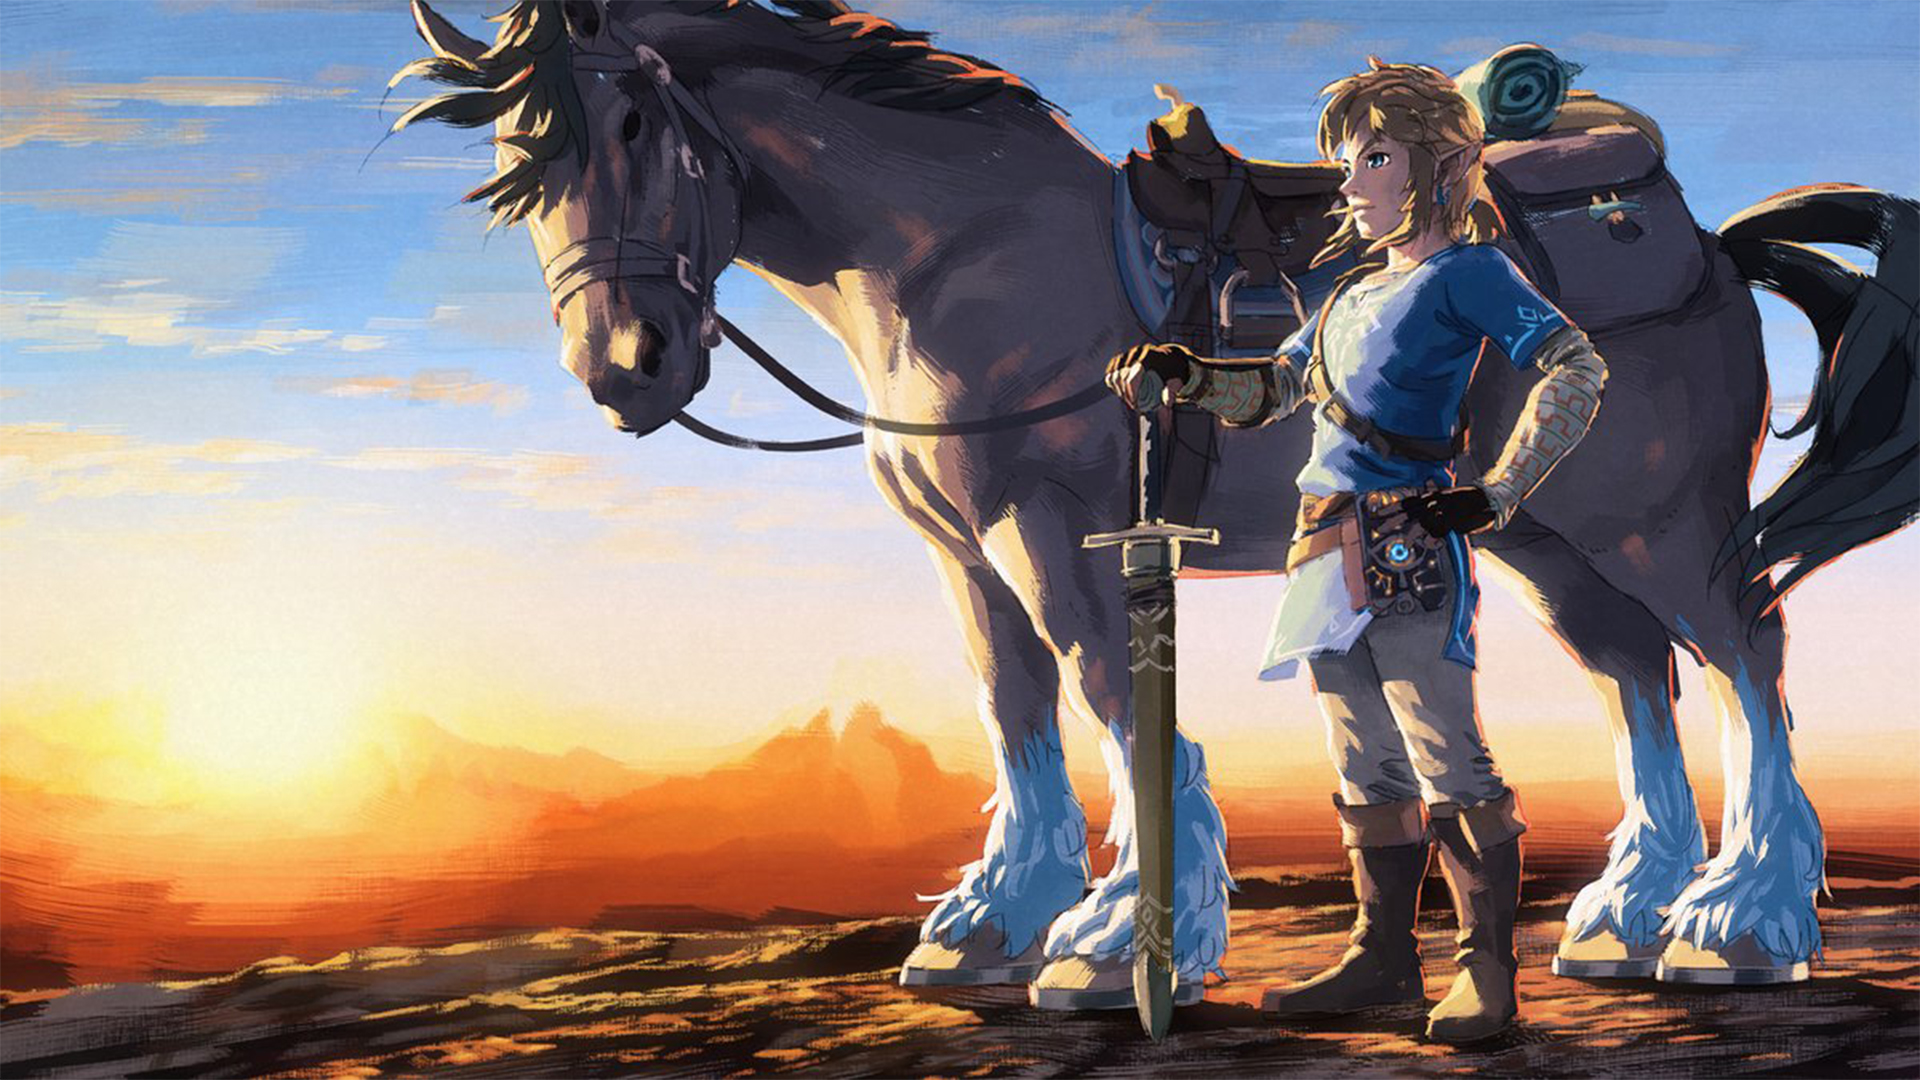 Nintendo releases new Breath of the Wild artwork | Nintendo Wire